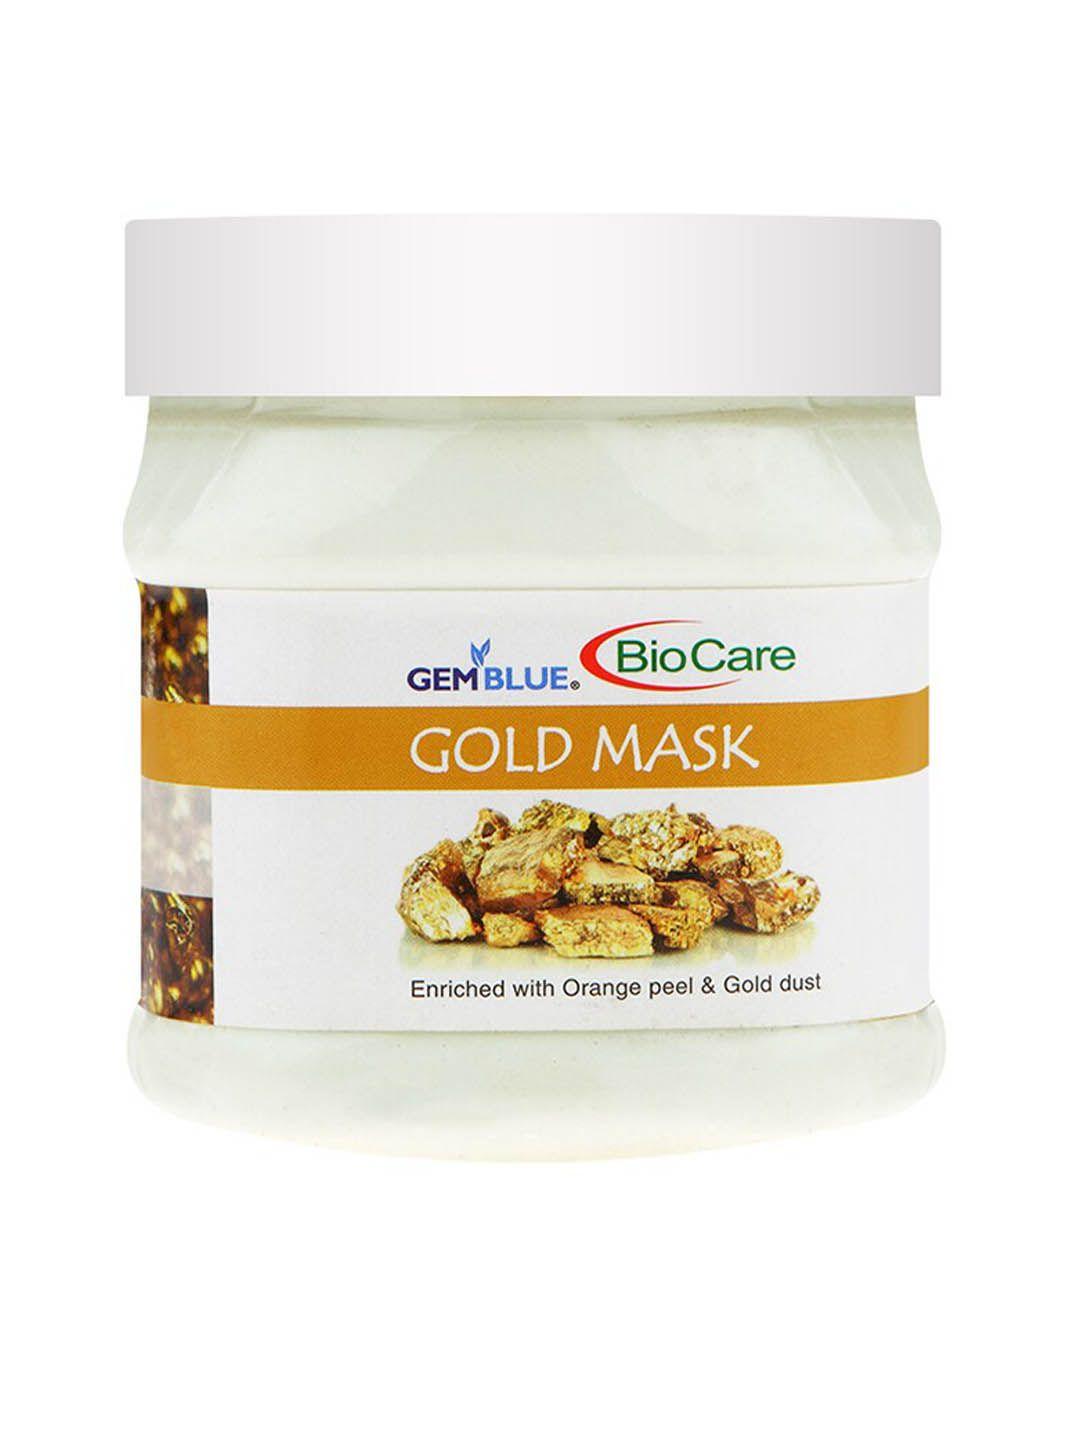 gemblue biocare gold mask